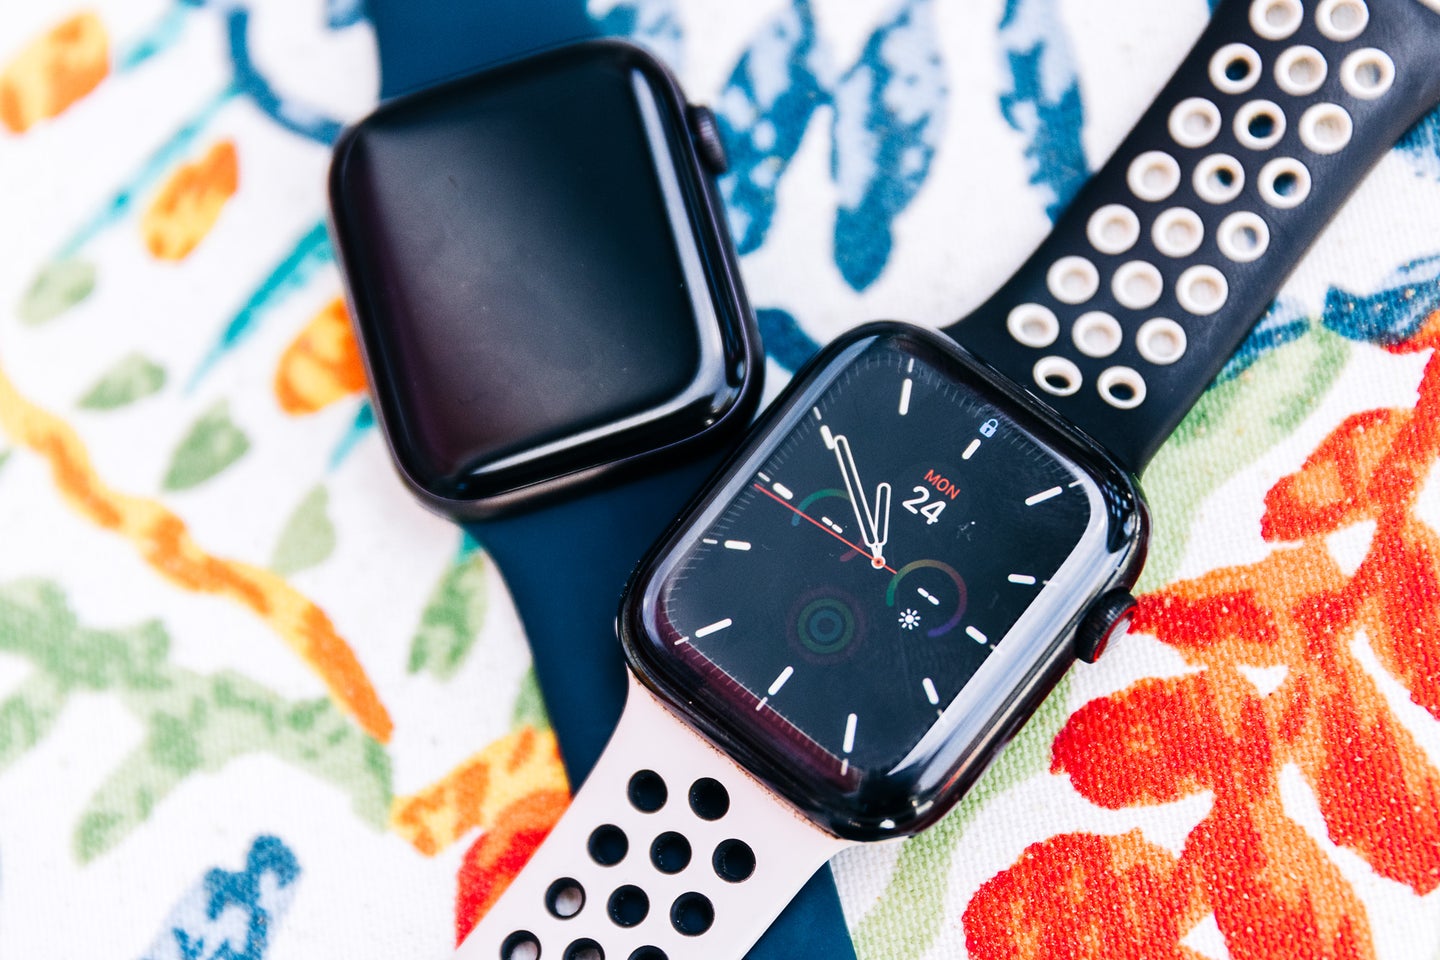 Apple Watch comparison